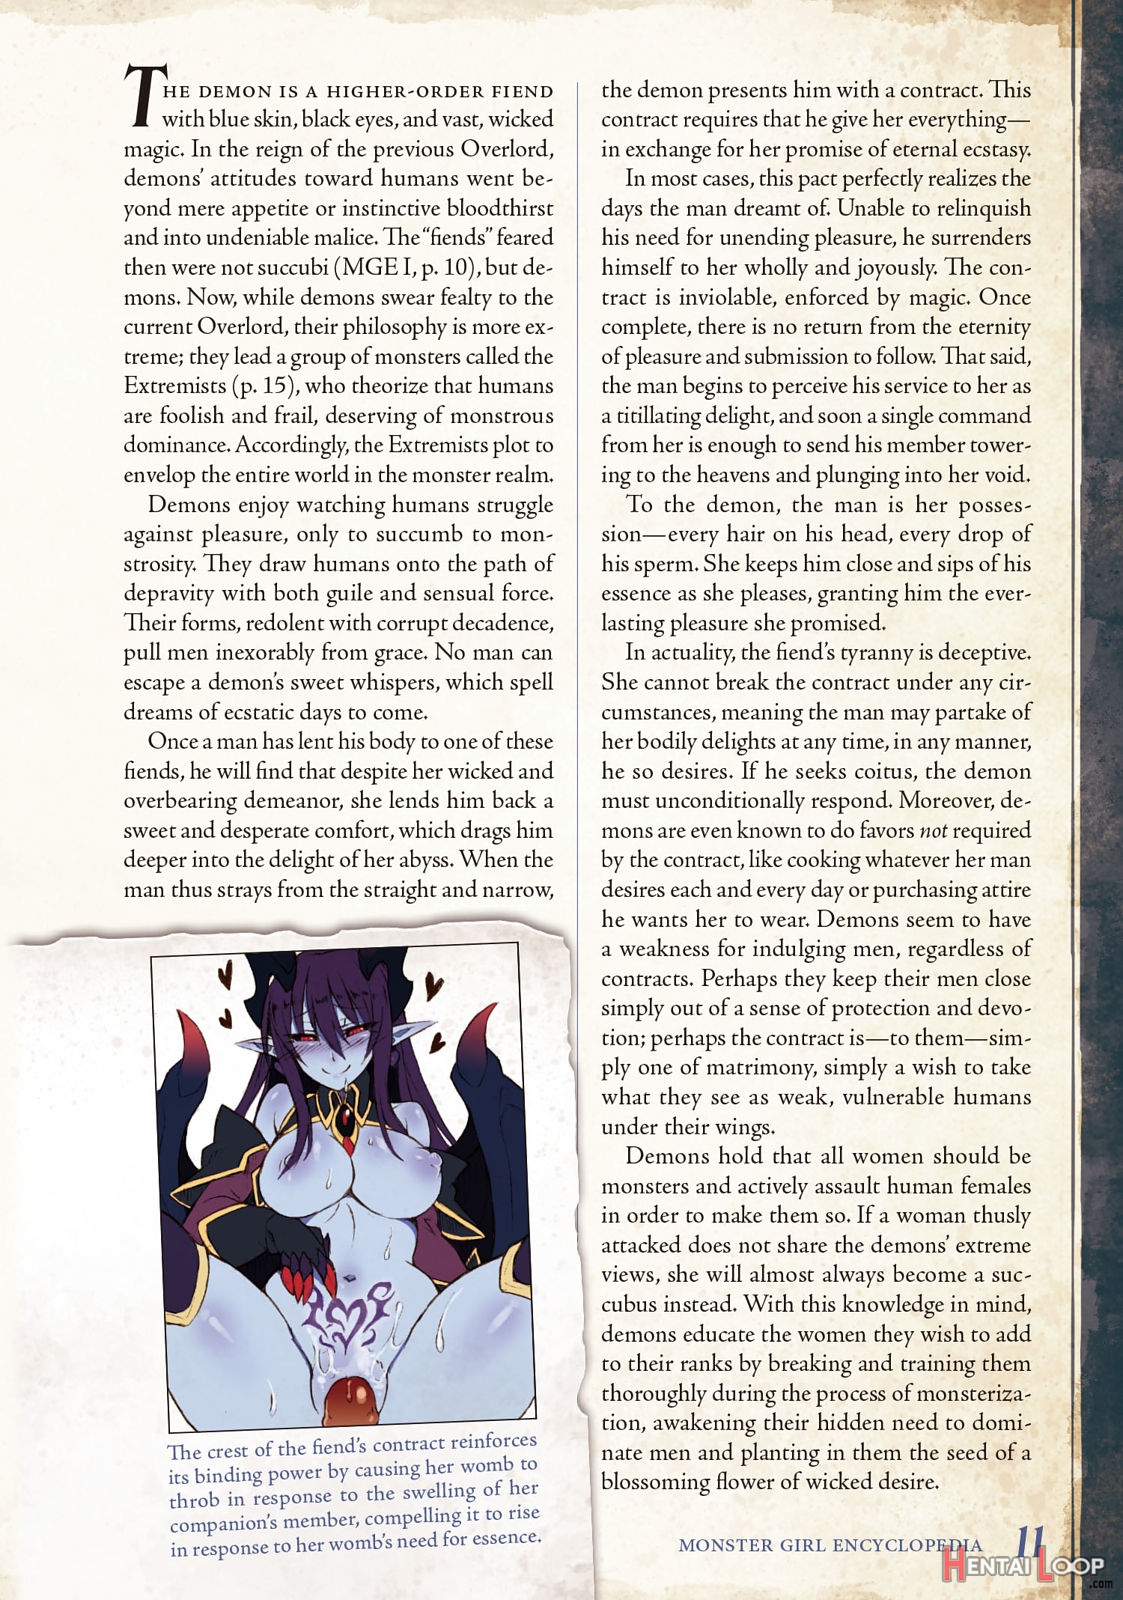 Monster Girl Encyclopedia Vol. 2 page 12